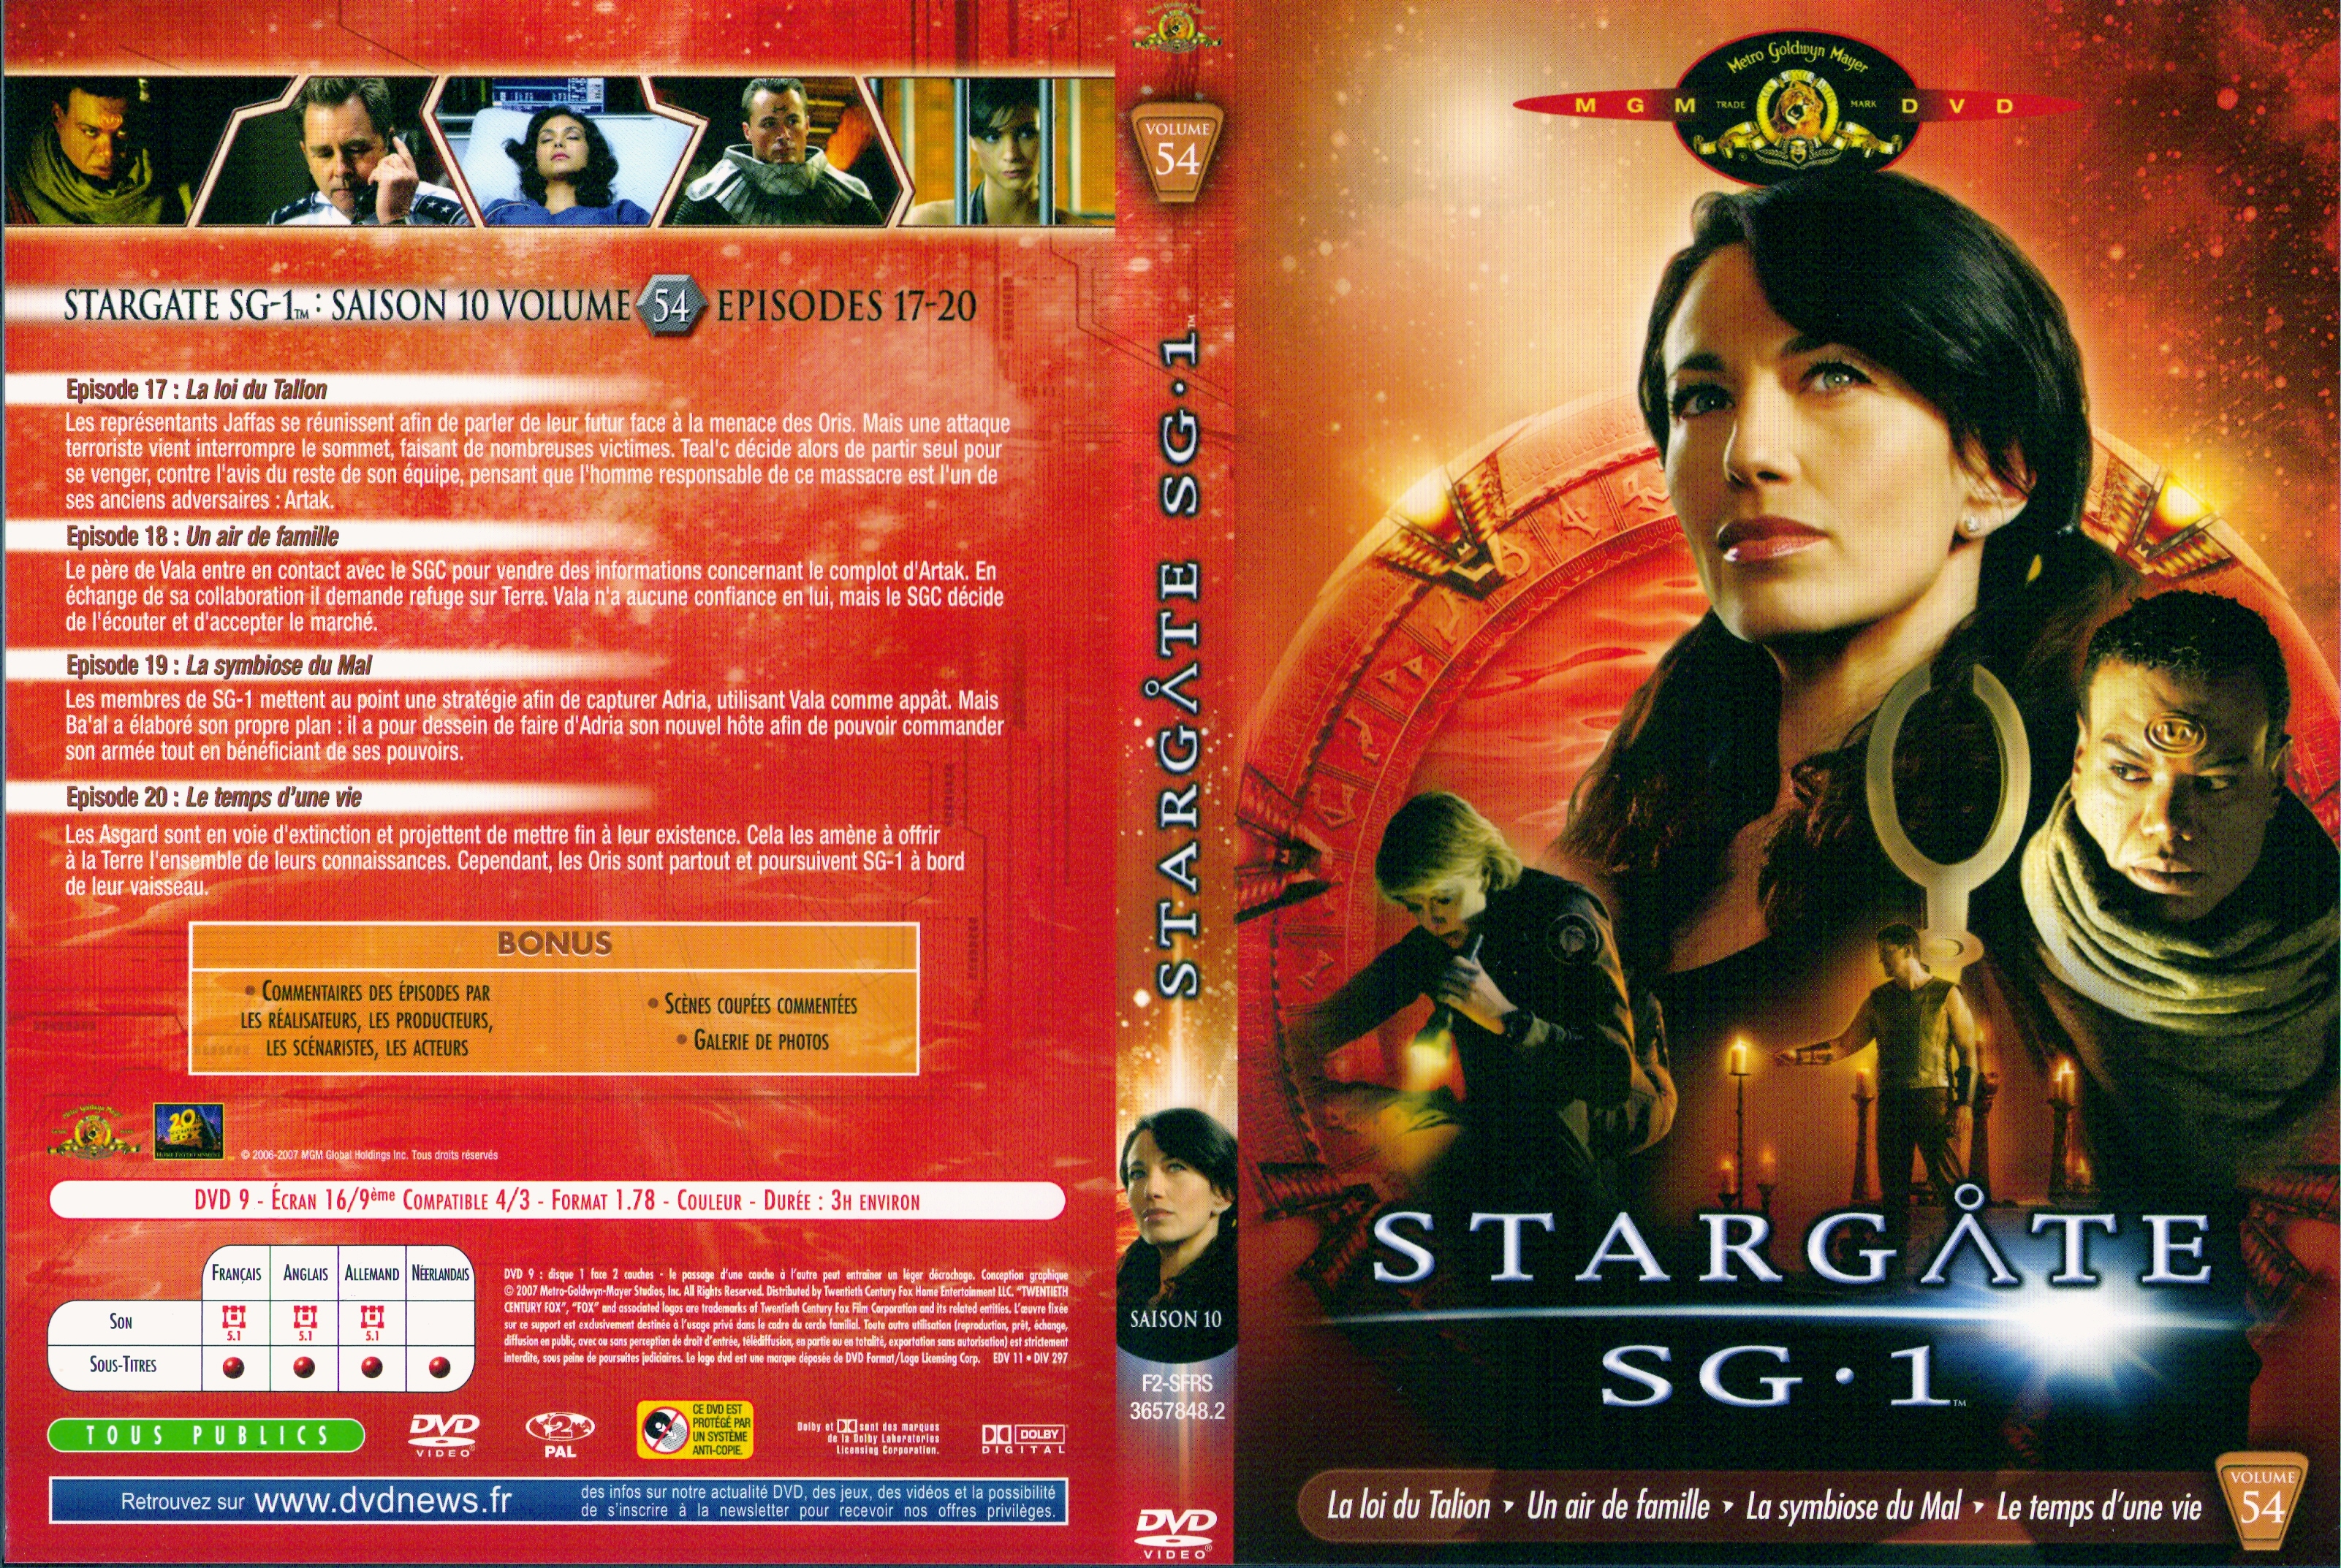 Jaquette DVD Stargate SG1 vol 54